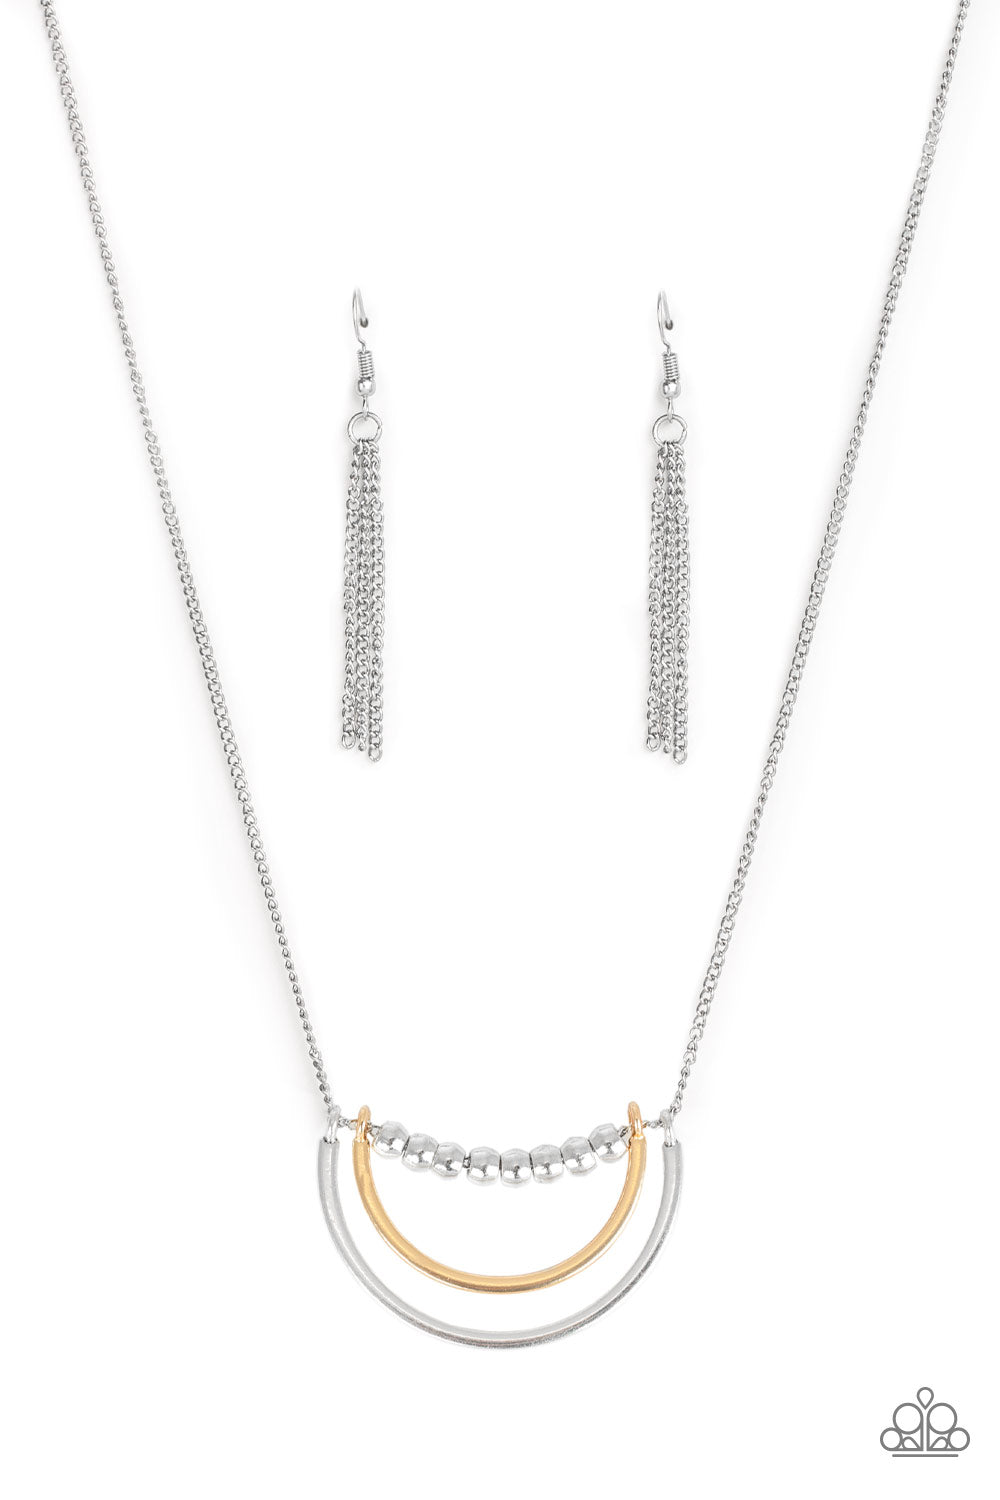 Artificial Arches - Silver (Multi) Necklace freeshipping - JewLz4u Gemstone Gallery